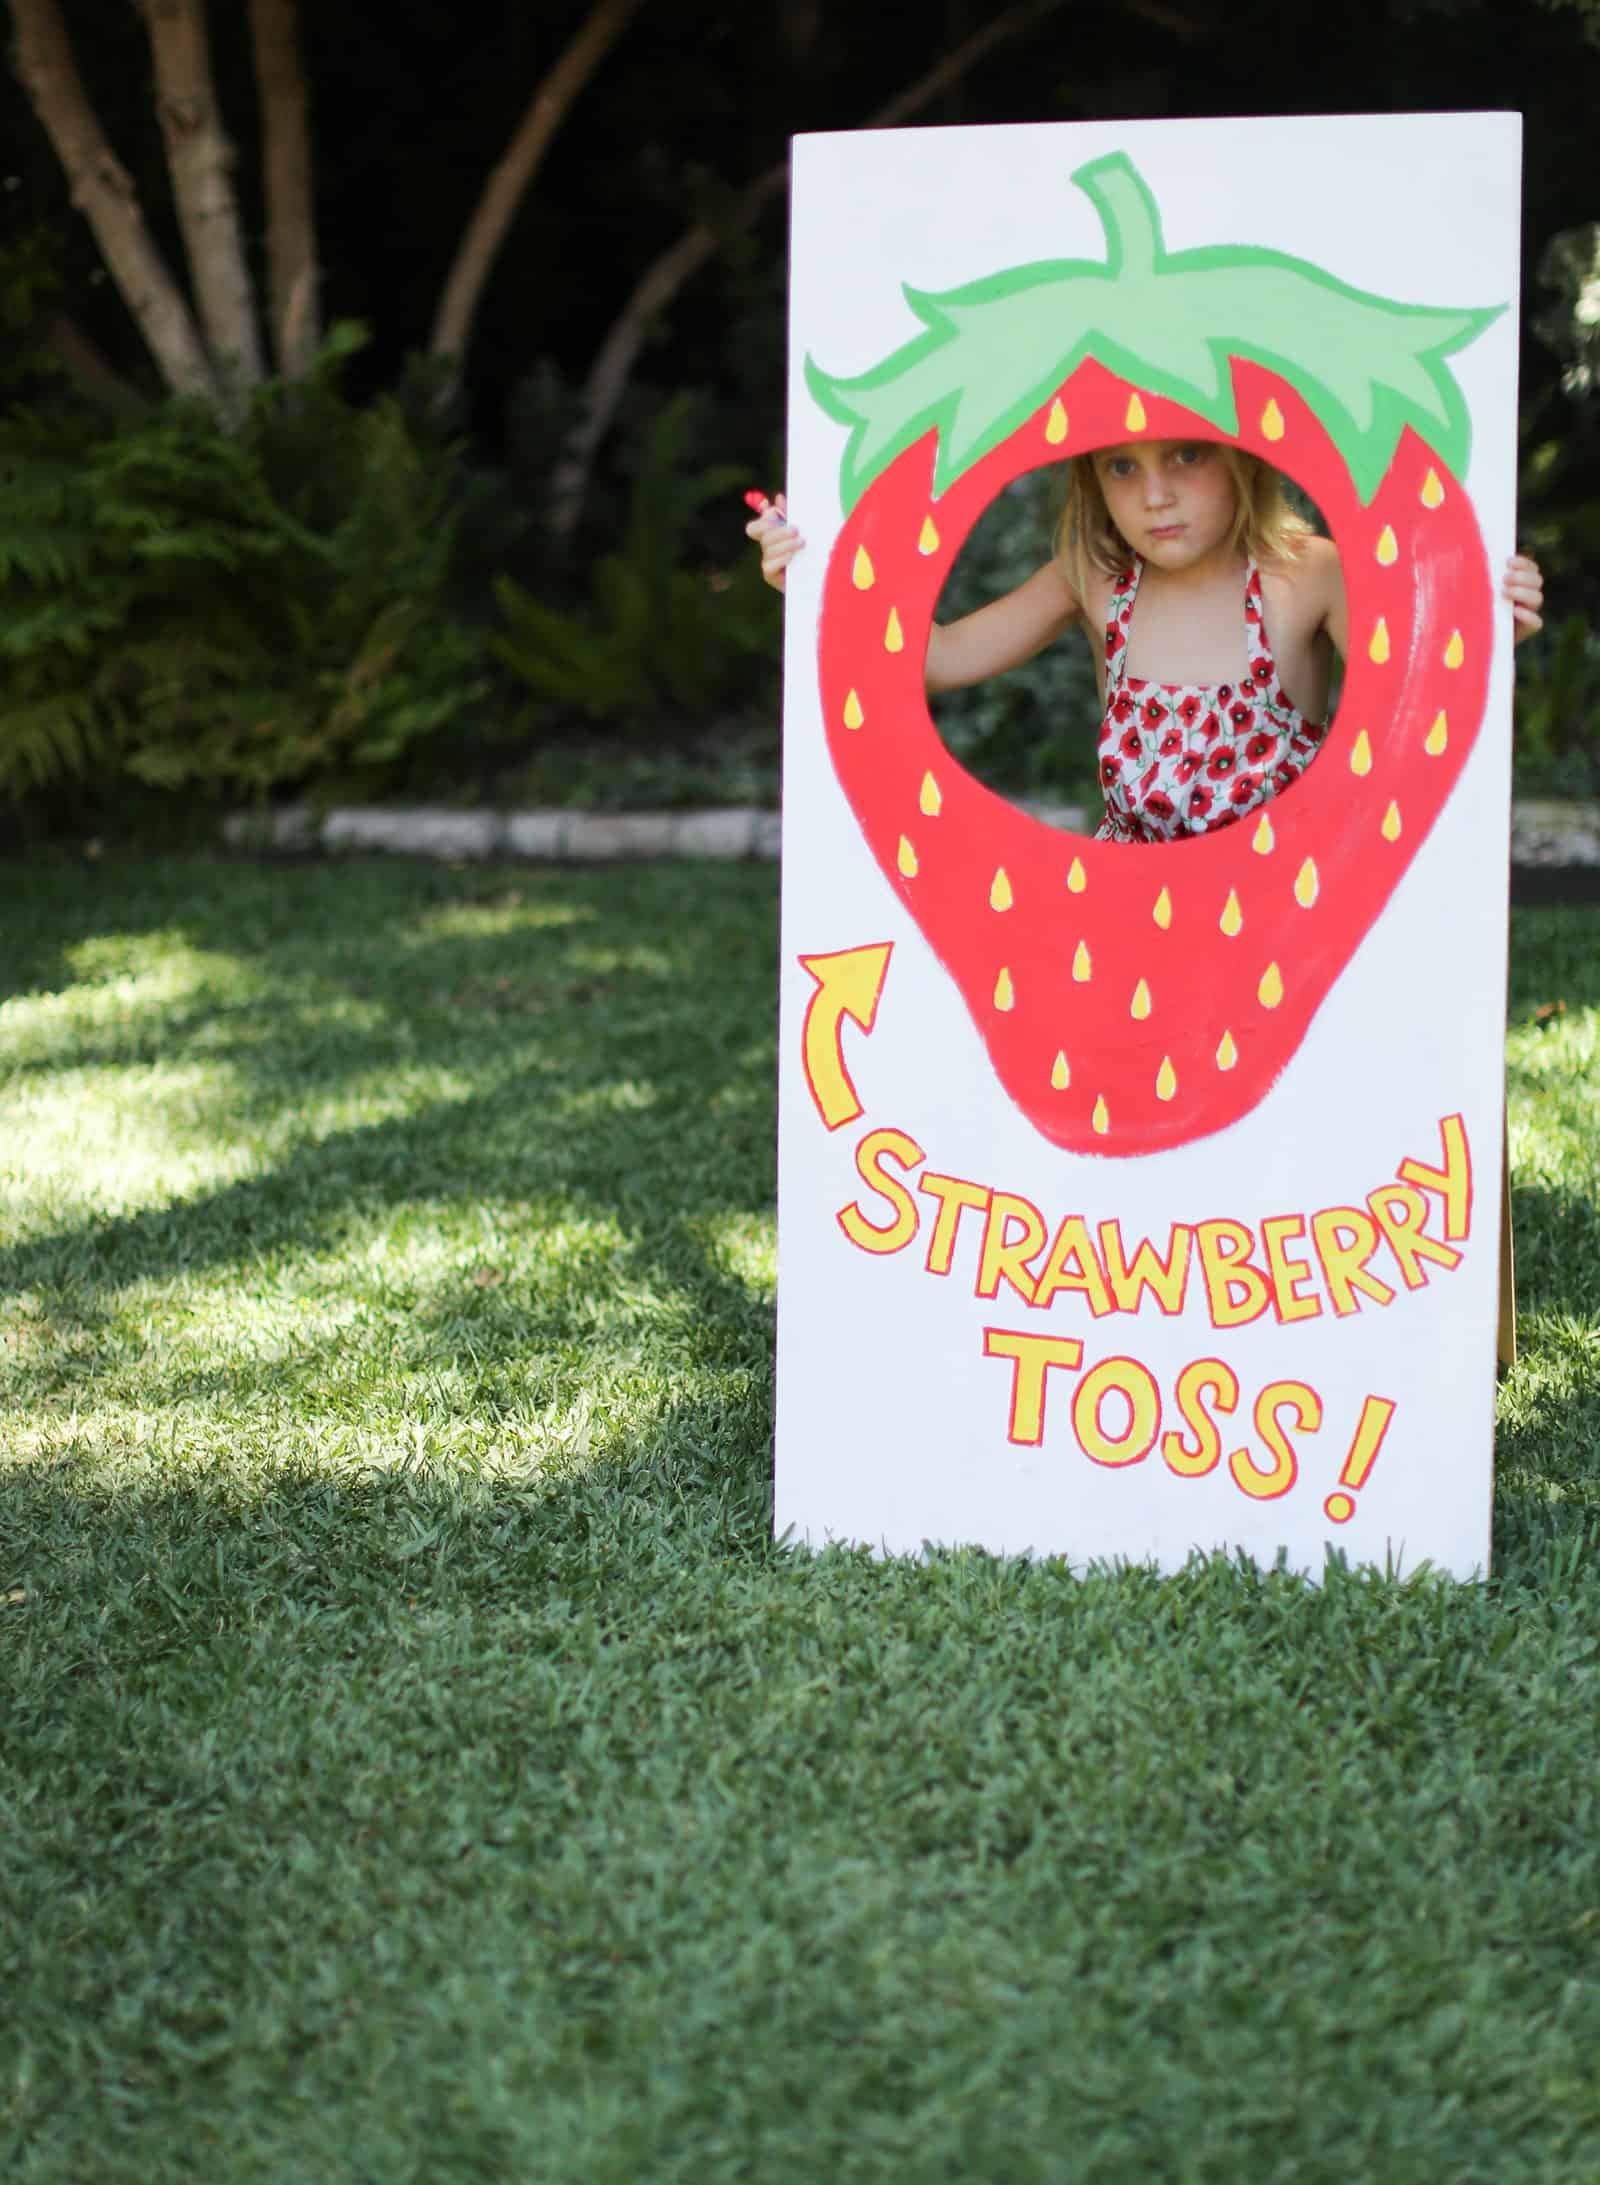 Strawberry Sweet - A Birthday Celebration by Tiffani Thiessen. Photos by Elizabeth Messina